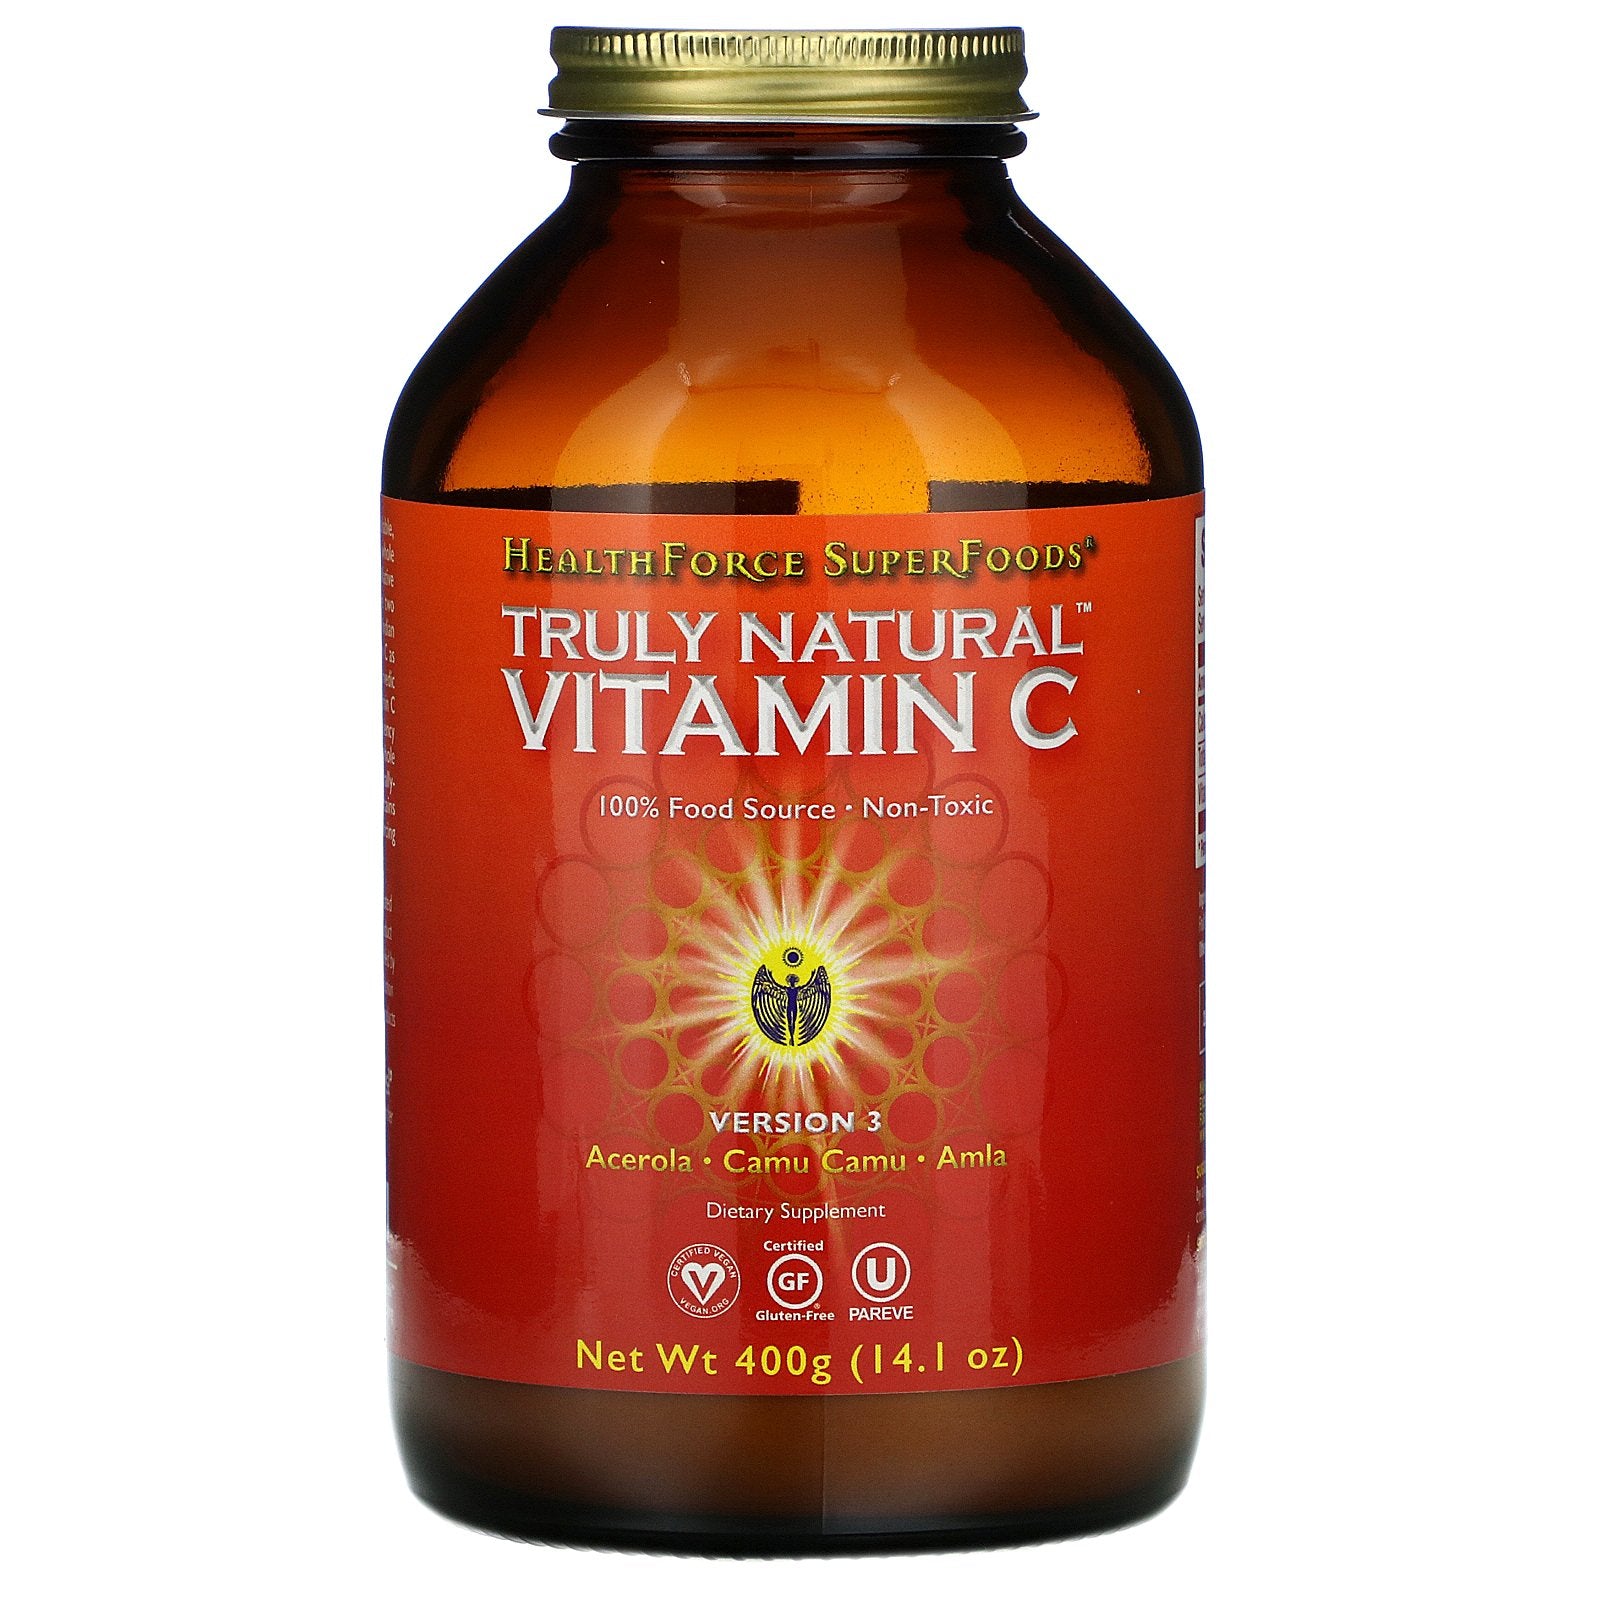 HealthForce Superfoods, Truly Natural Vitamin C, 14.1 oz (400 g)